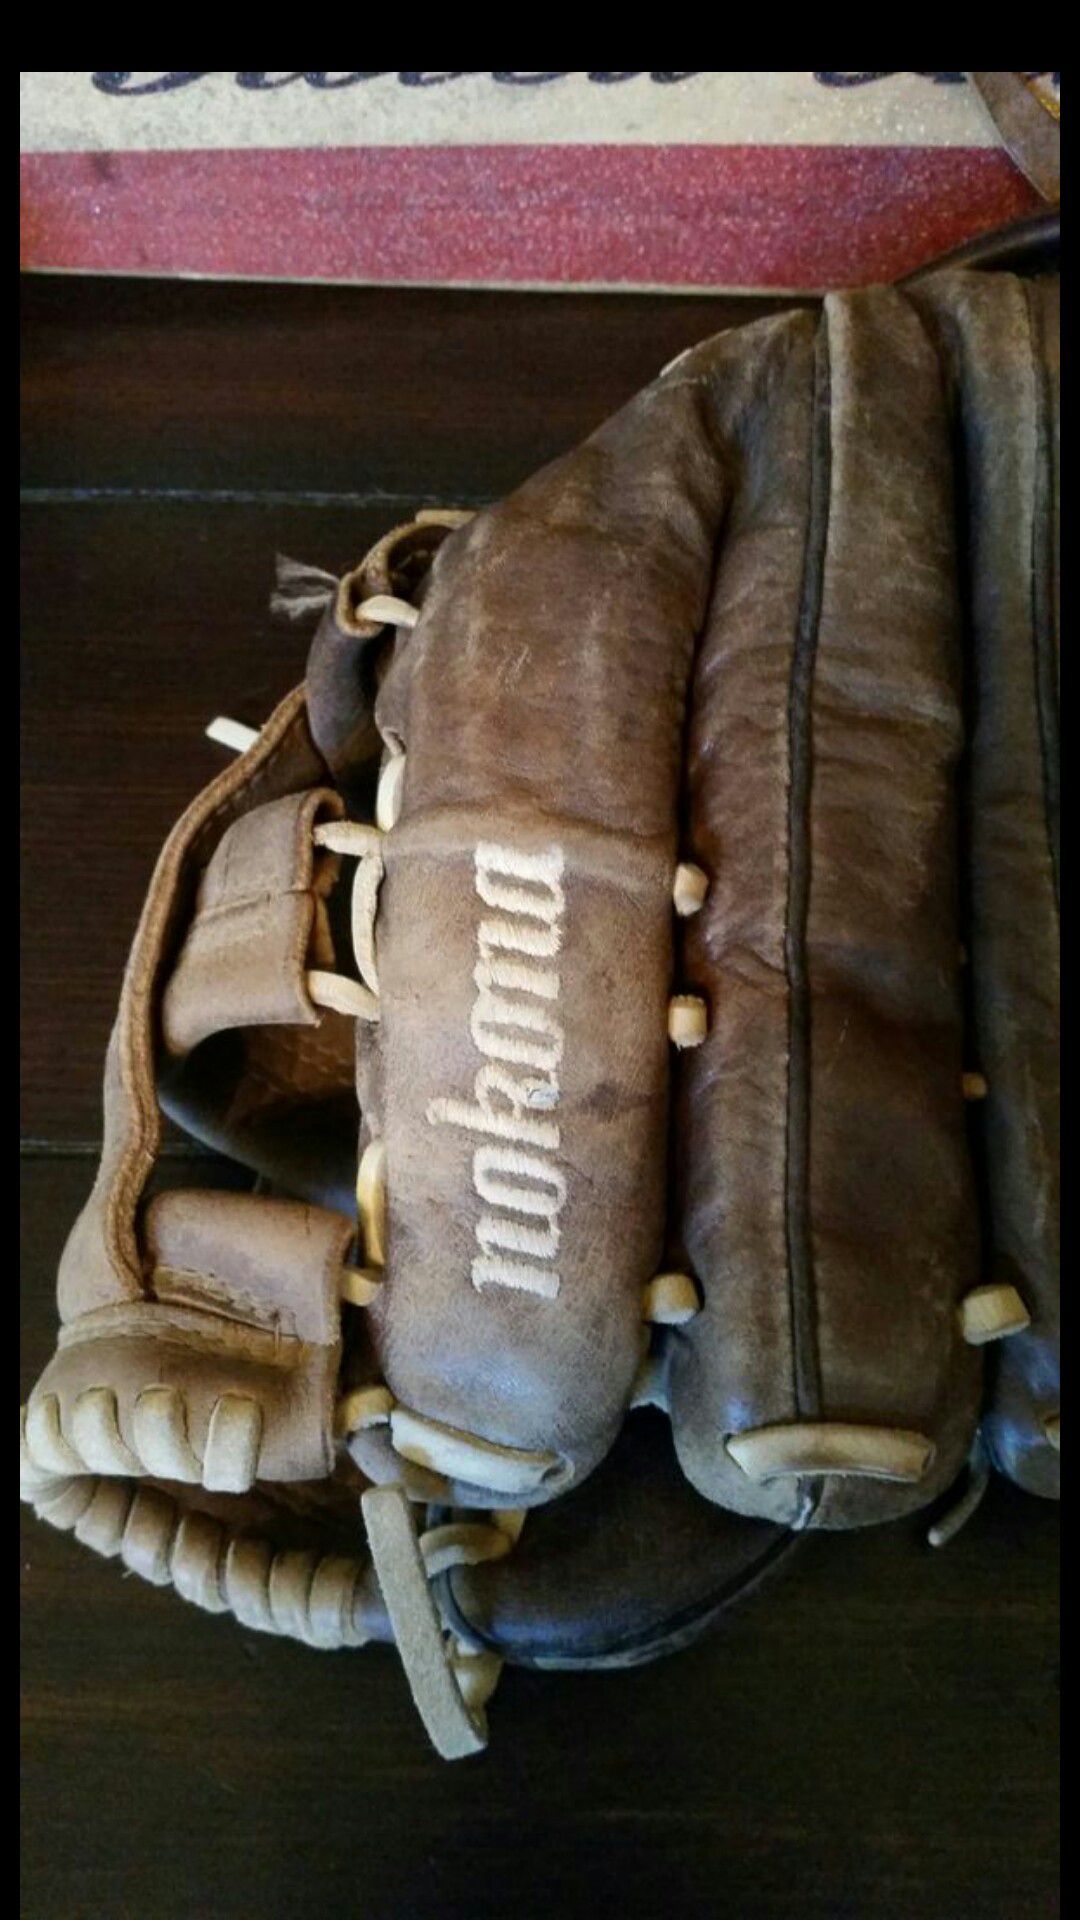 NOKONA X2 ELITE V1200 PERFECT NO FLAWS CONDITION fastpitch softball baseball glove mitt baseball bat little league fastpitch